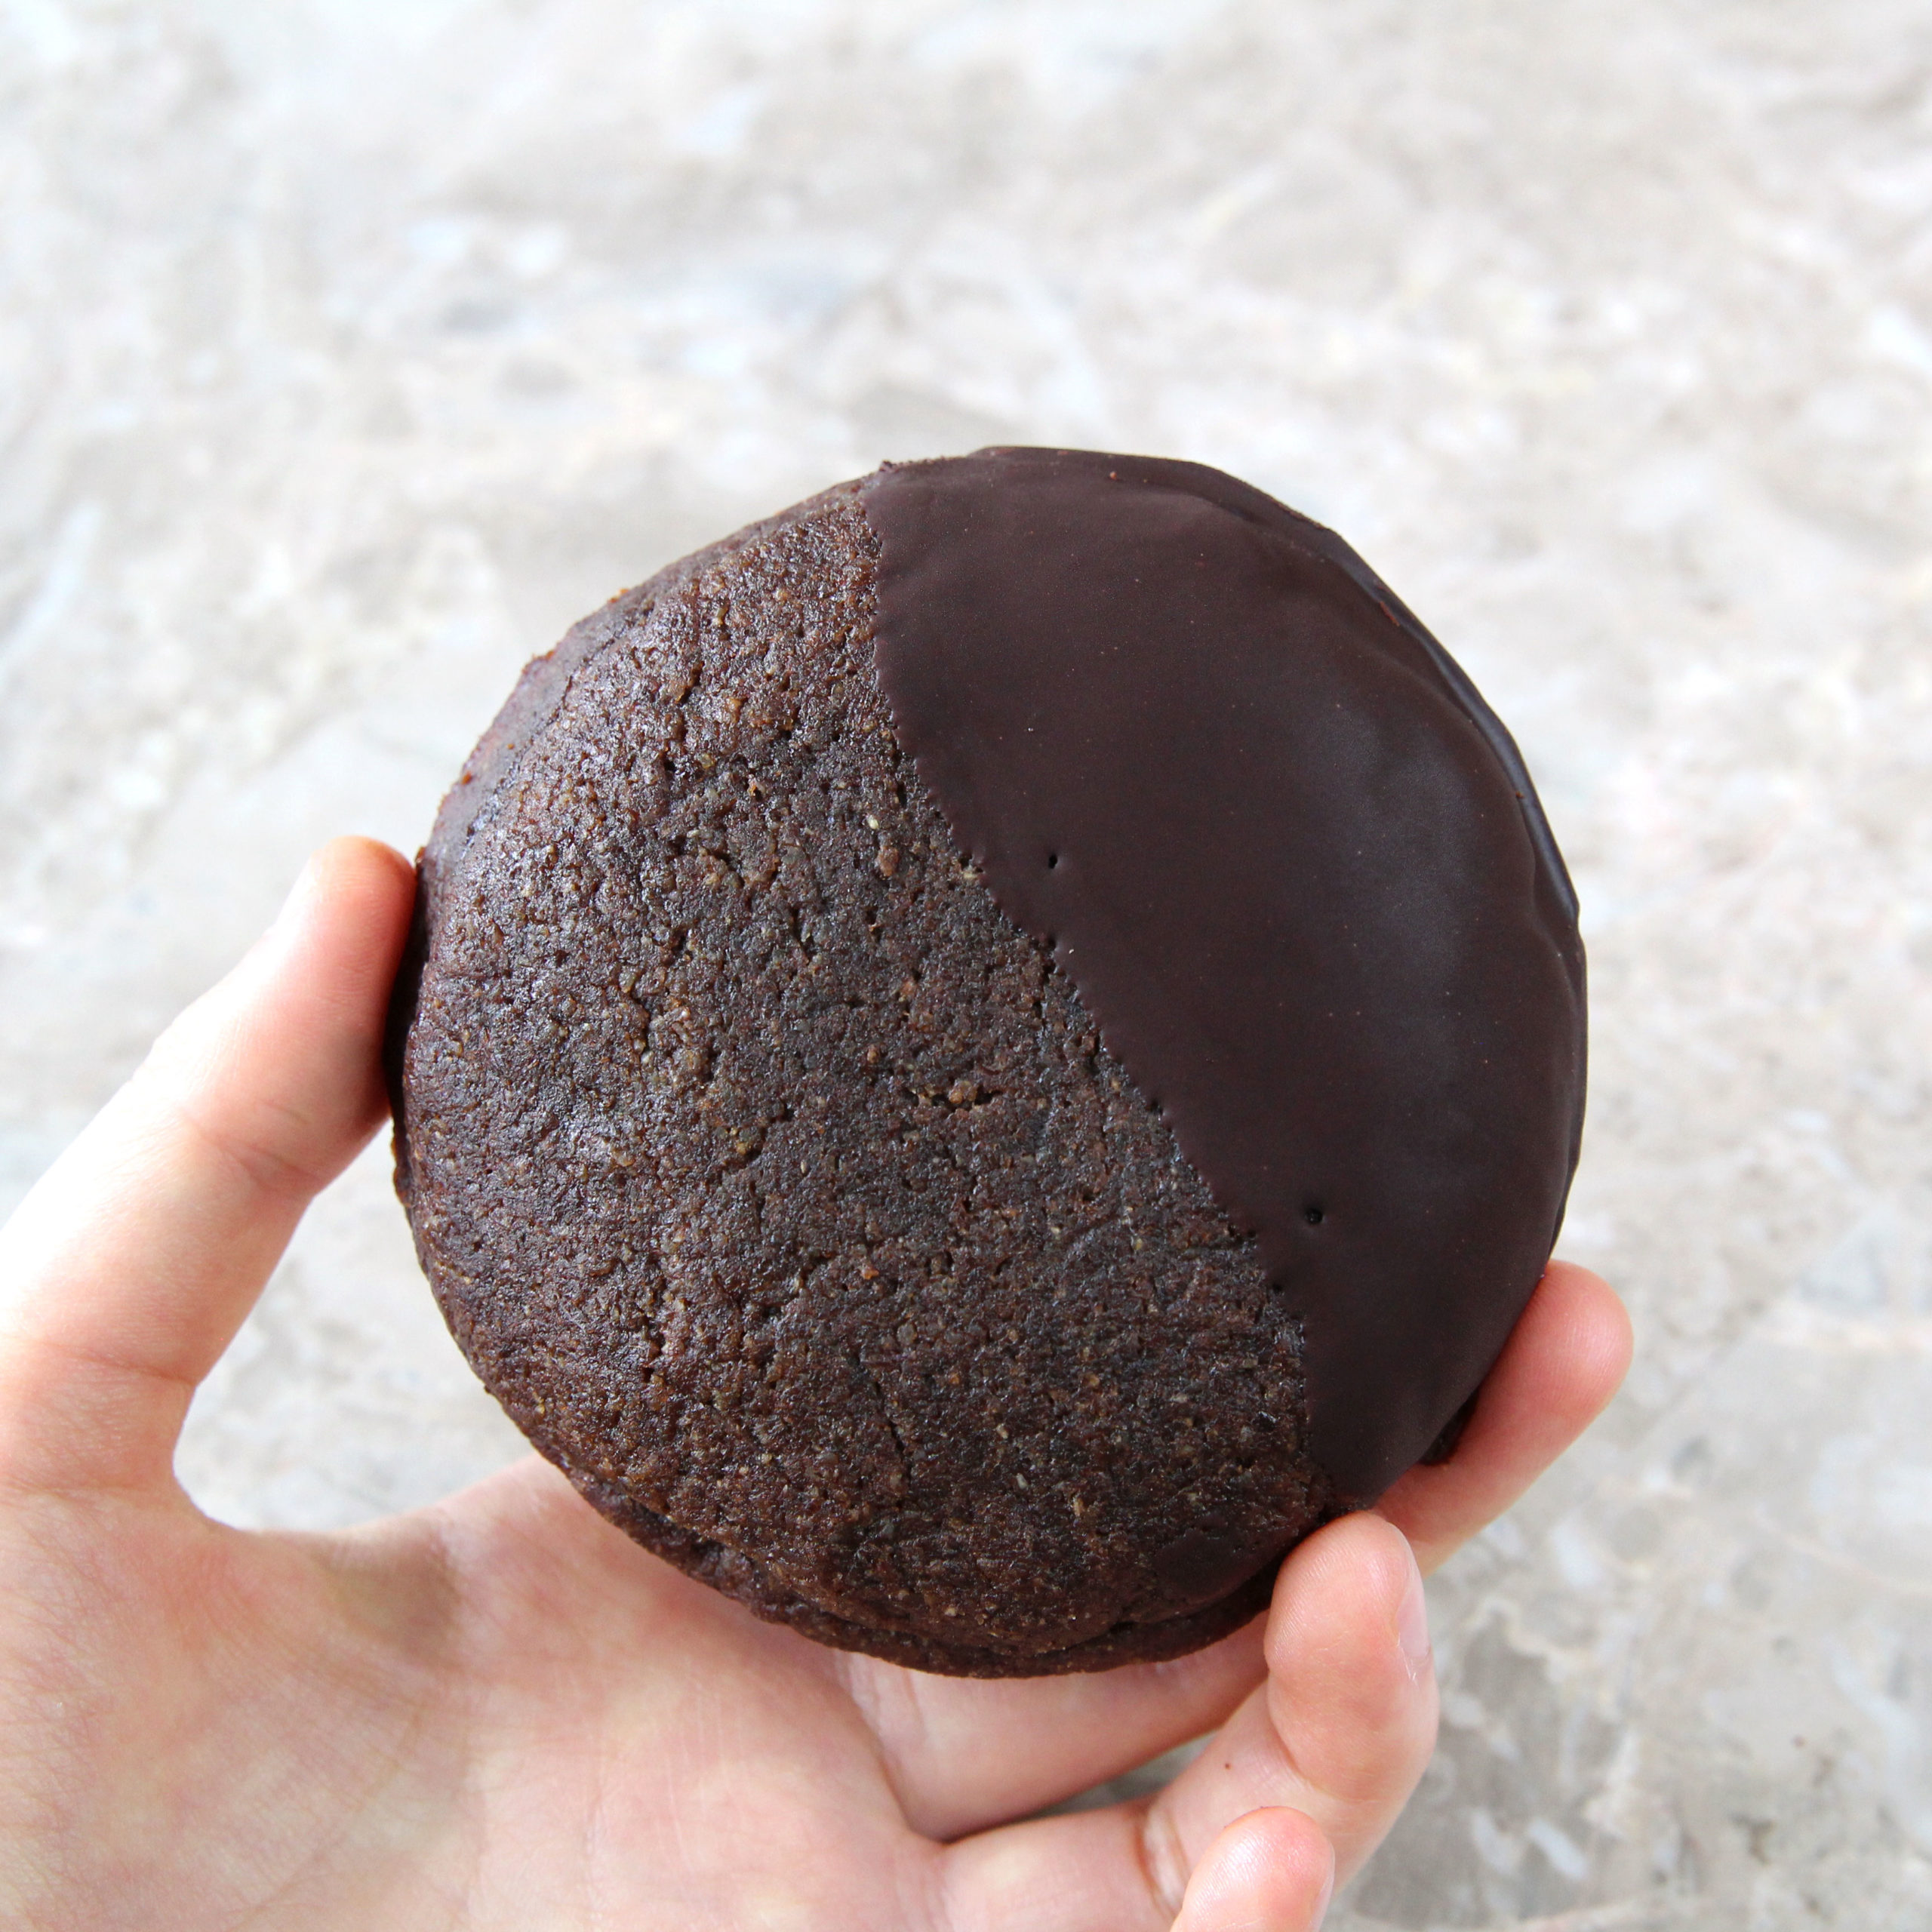 Healthy Vegan Double Chocolate Cookies made with Avocado - avocado conut